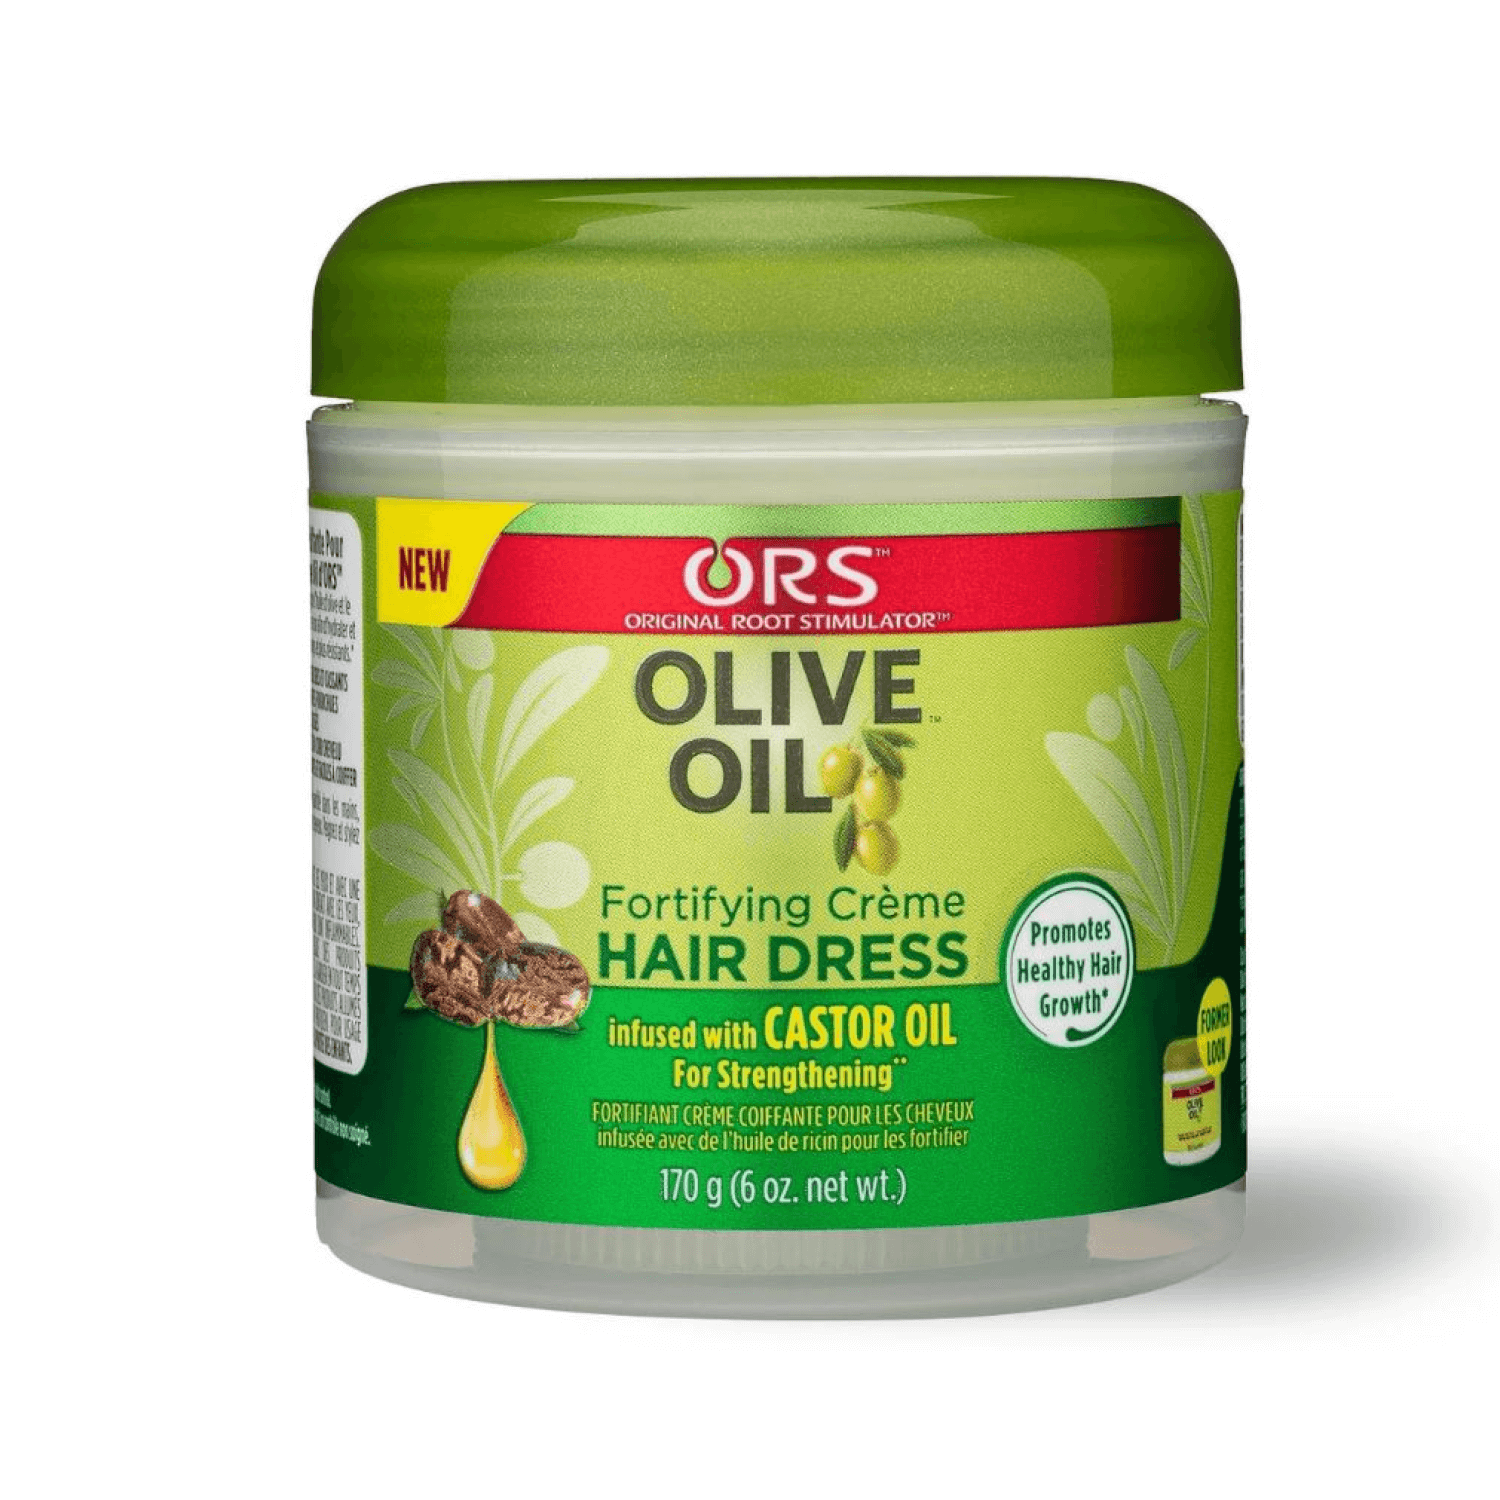  De La Cruz Pure Olive Oil - Natural Expeller Pressed